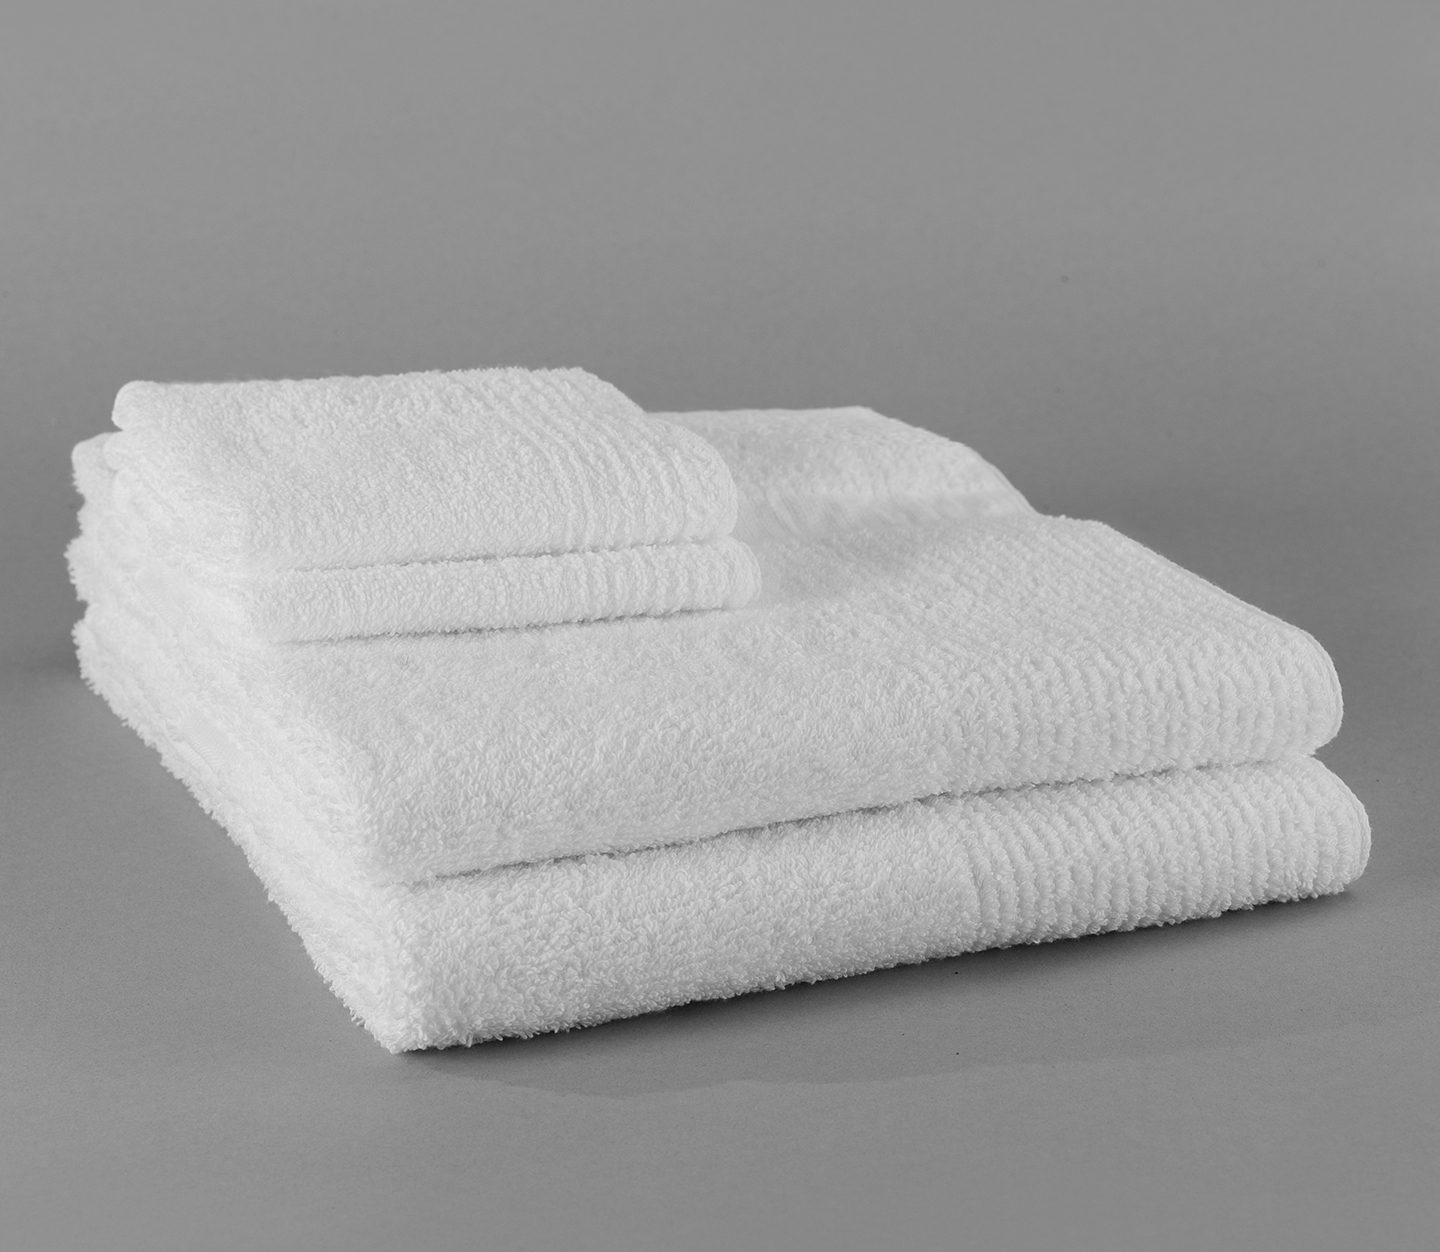 Double Duty Towels | Healthcare Towels Built to Last